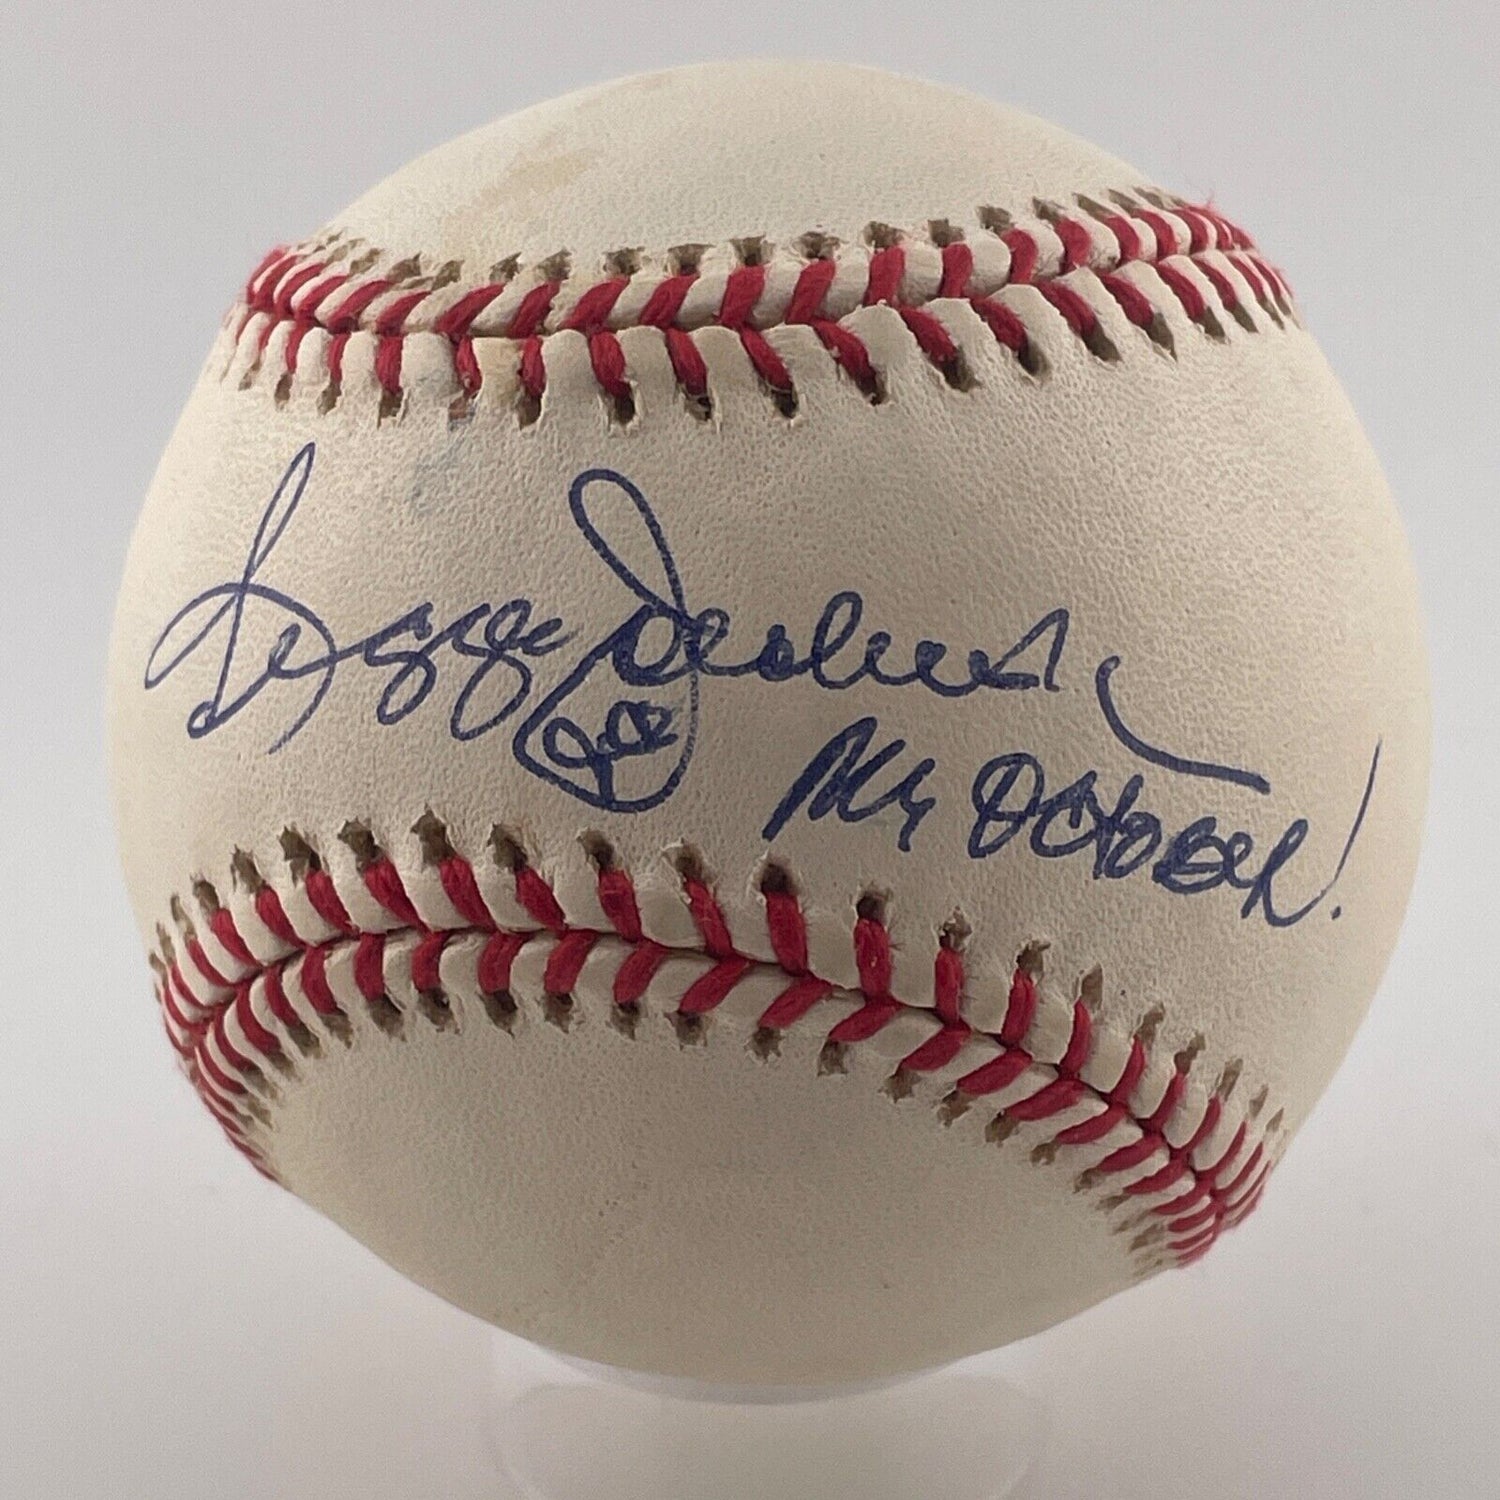 Reggie Jackson Signed Inscribed Baseball. Mr. October. New York Yankees. JSA